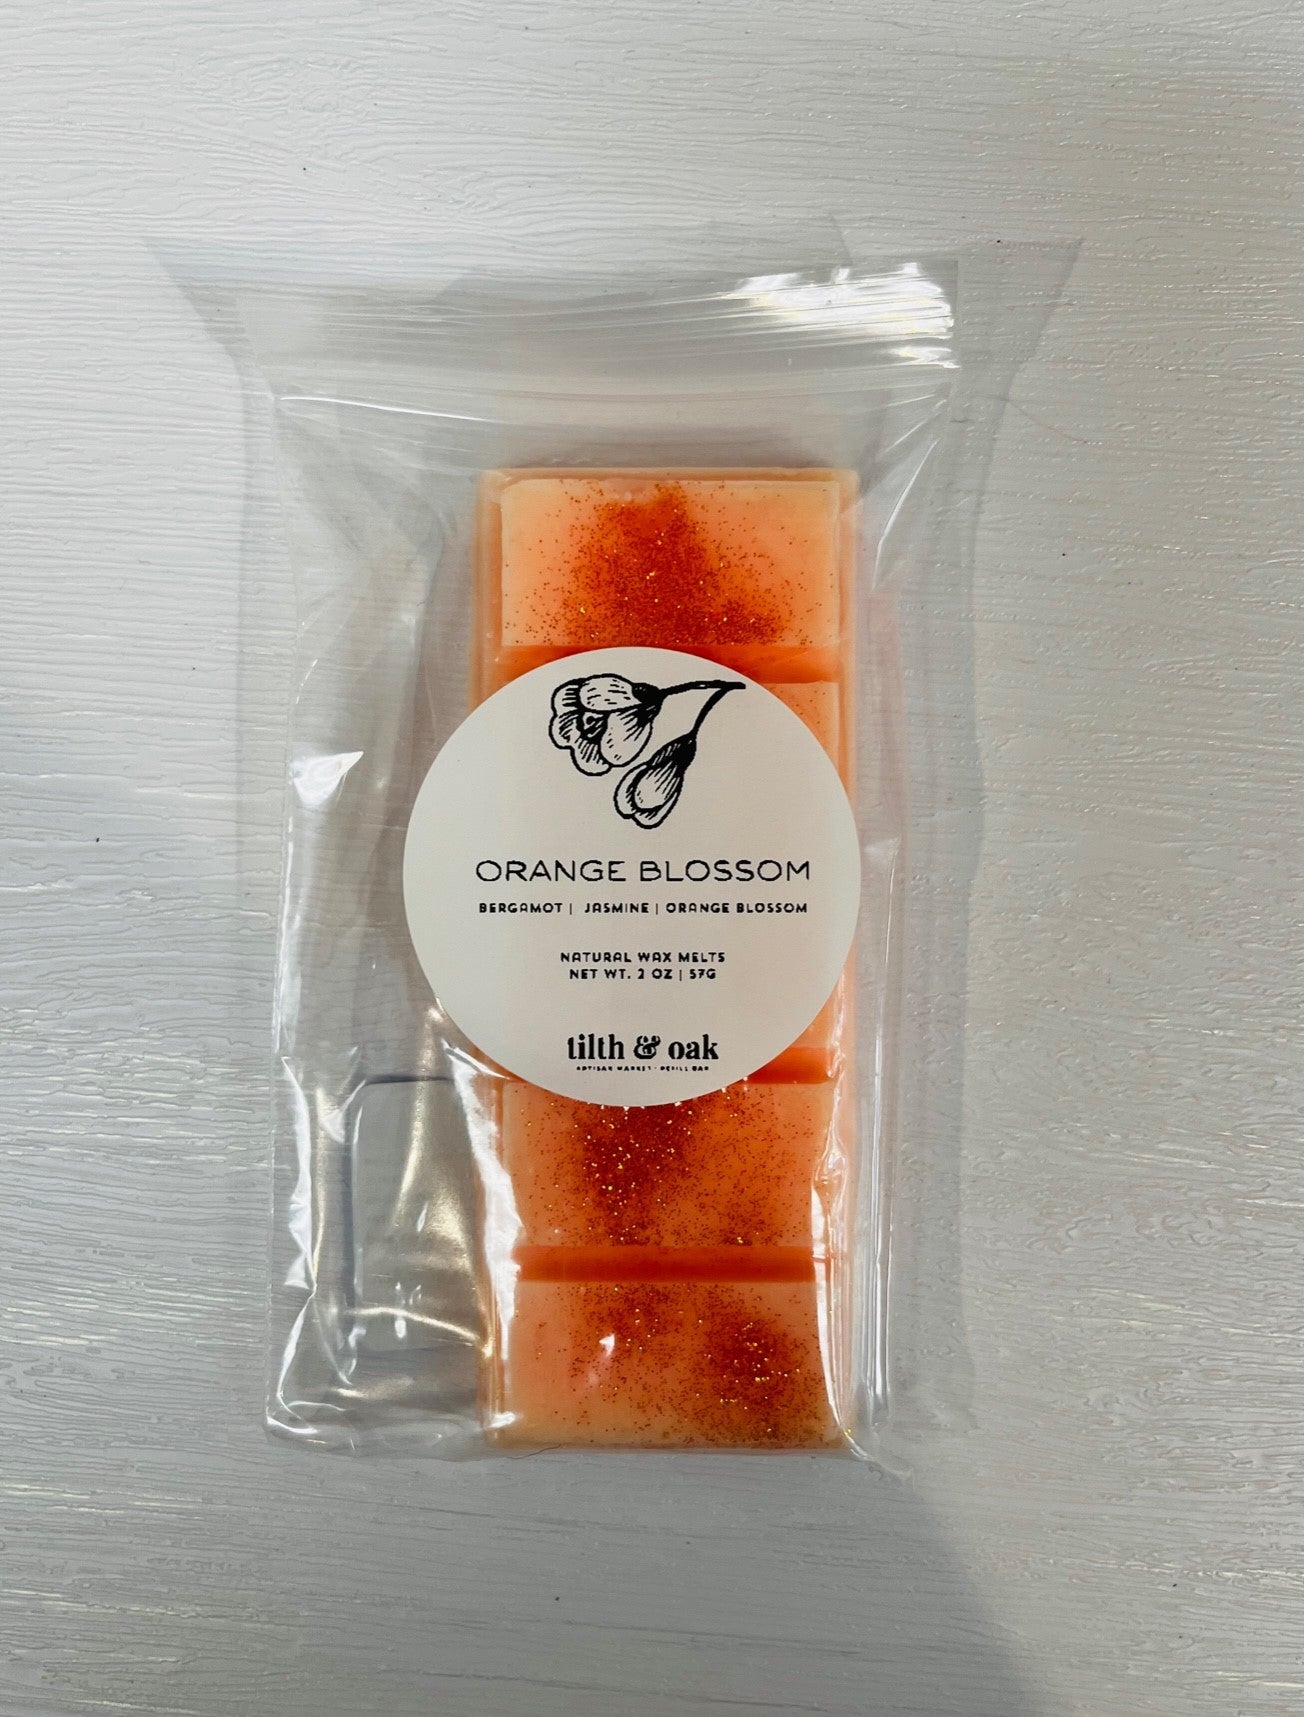 Tilth & Oak - Orange Blossom Wax Melt